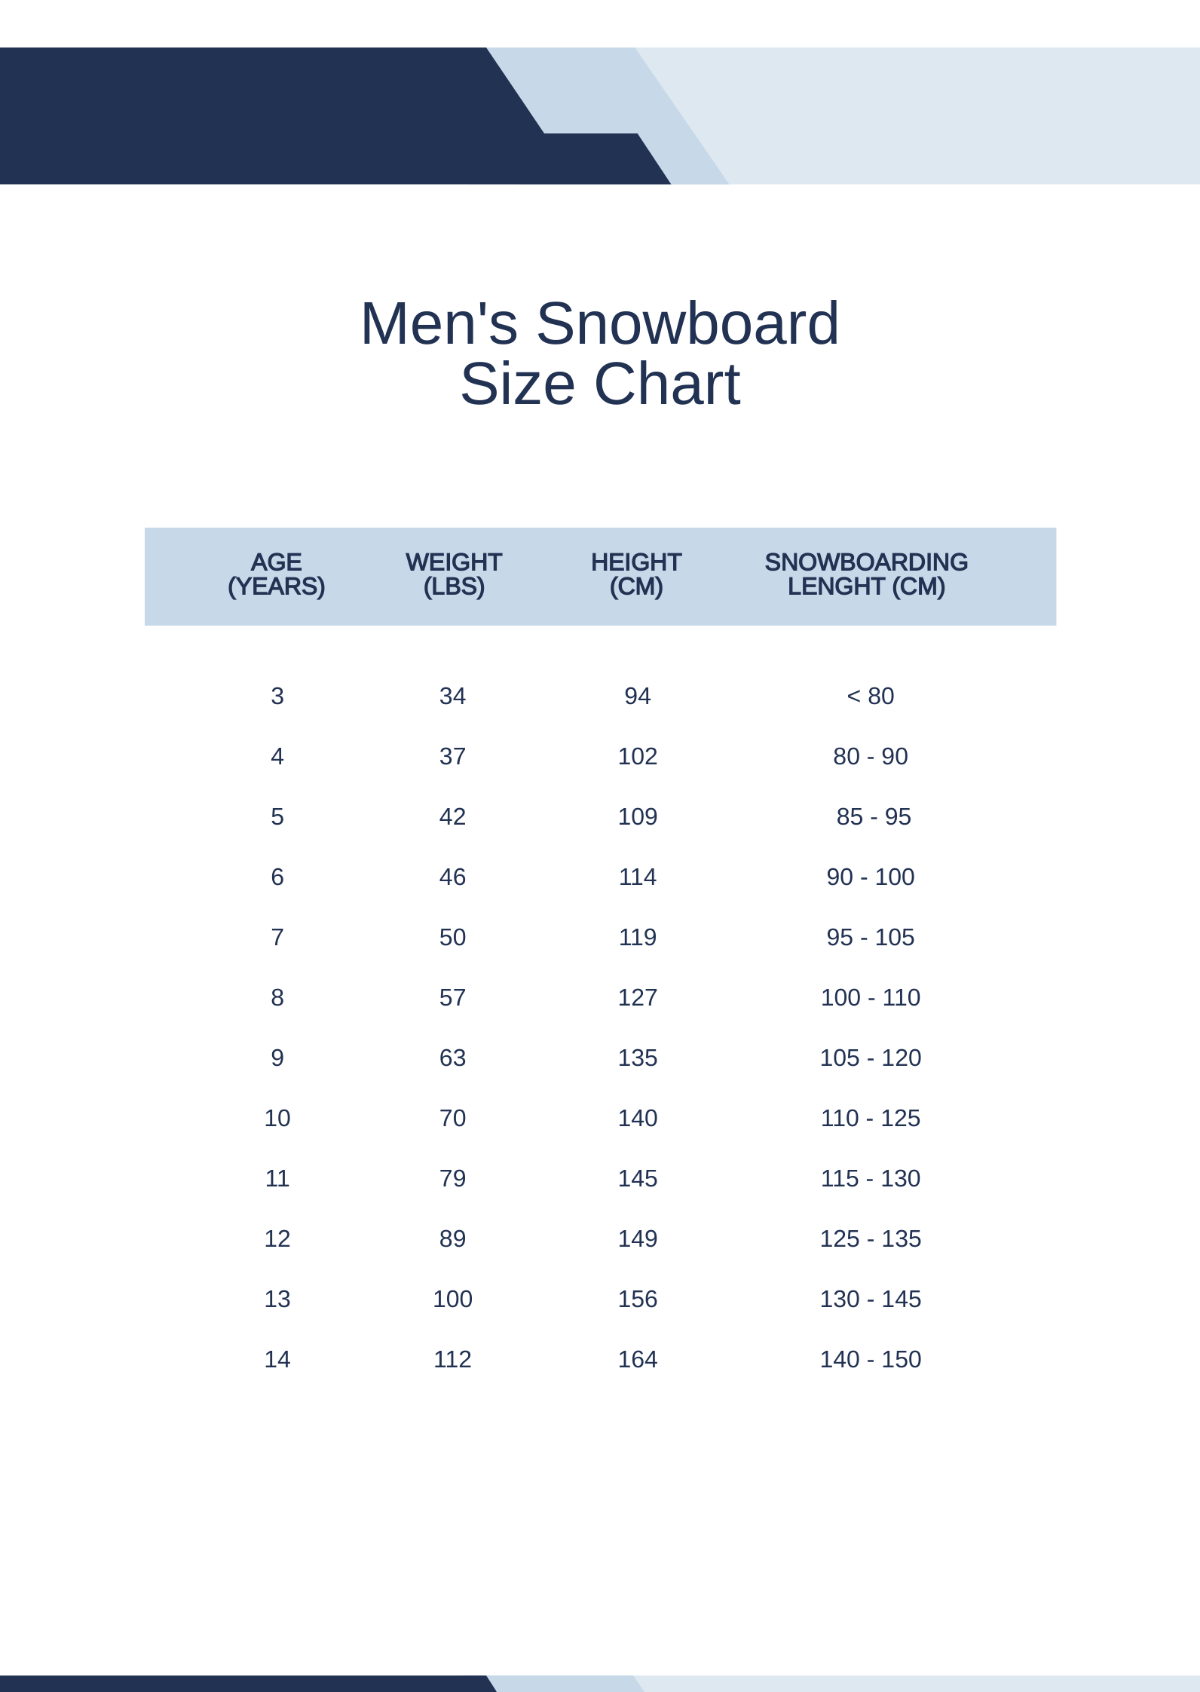 Men's Snowboard Size Chart Template